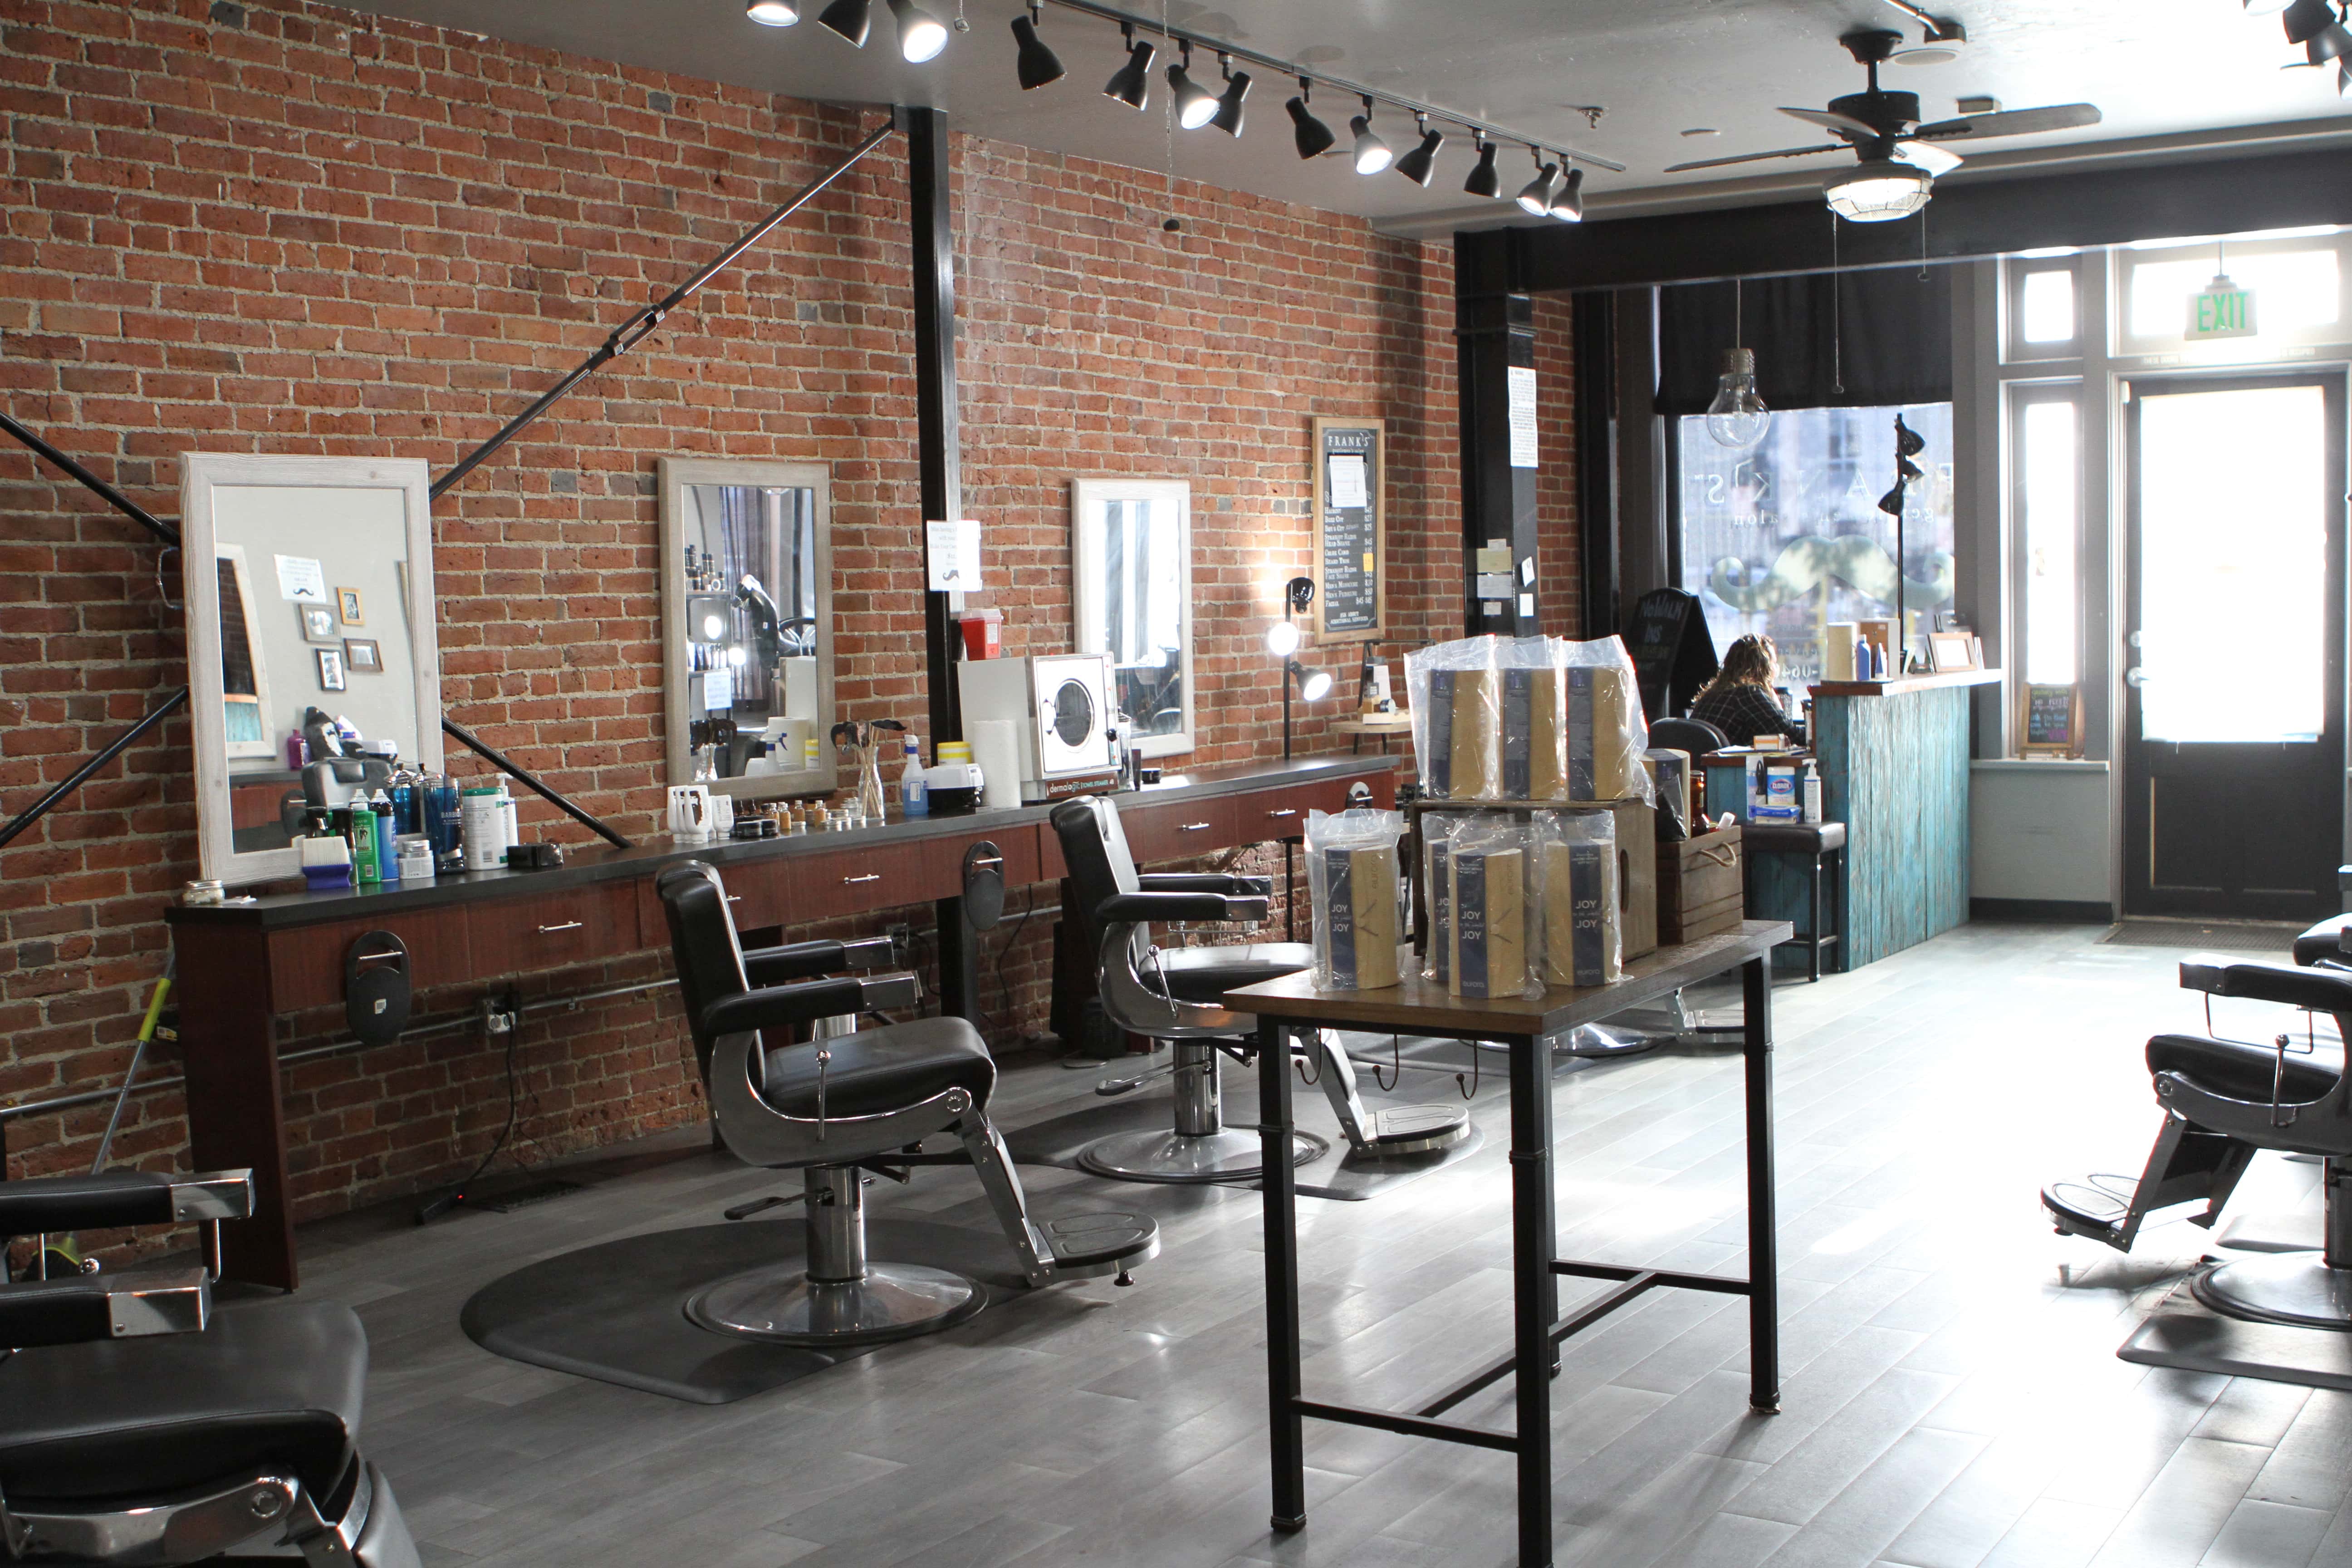 Frank s Barber Shop a Gentlemen s Salon - Denver, CO, US, hairstyles men curly hair